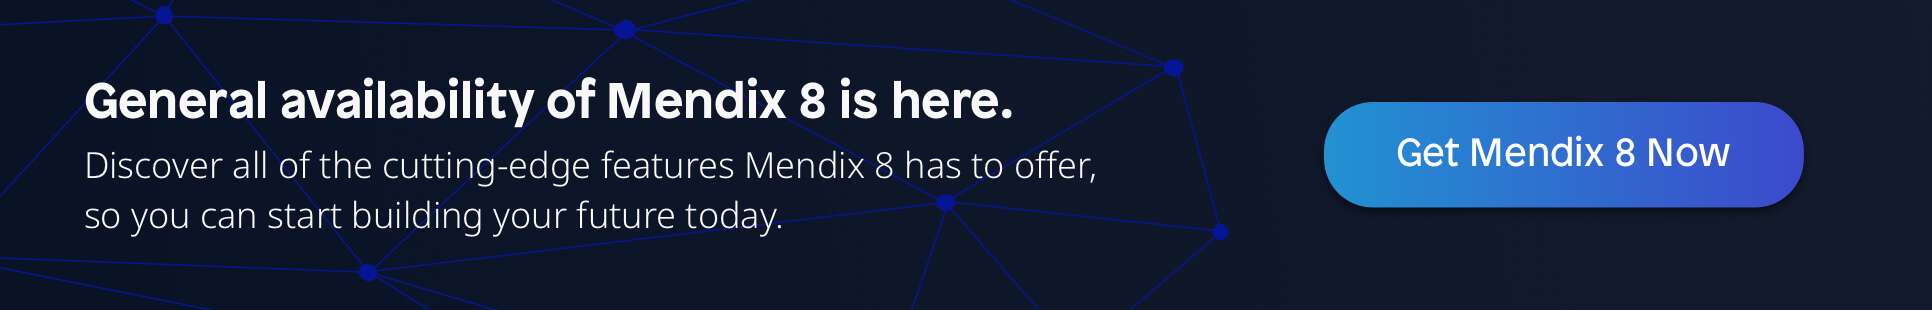 Announcing general availability of Mendix 8